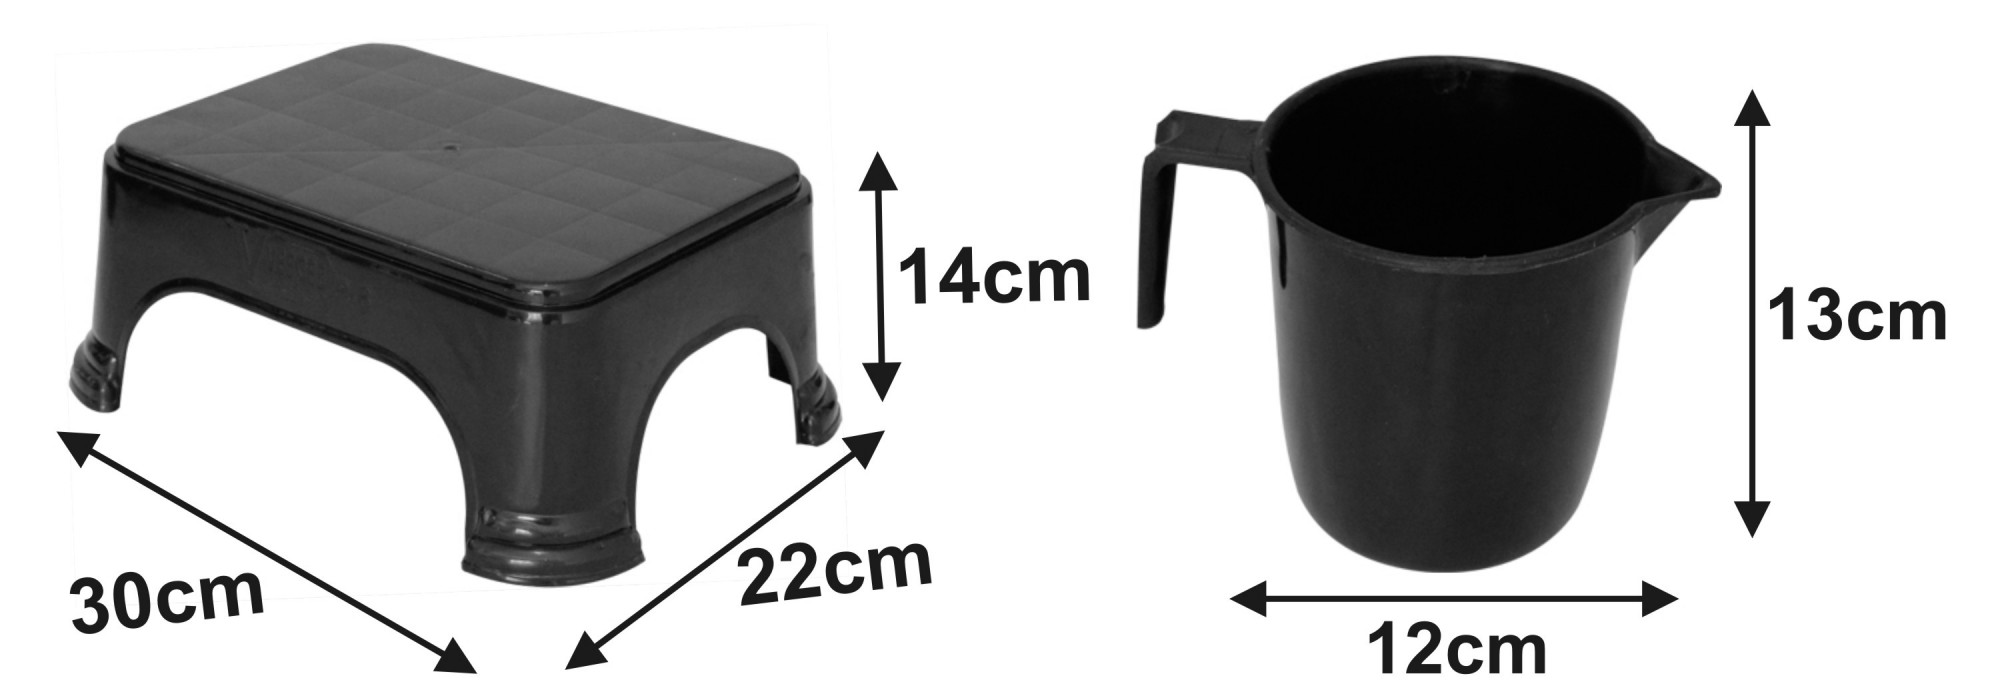 Kuber Industries 2 Pieces Unbreakable Virgin Plastic Multipurpose Bathroom Stool & Mug Set (Black)